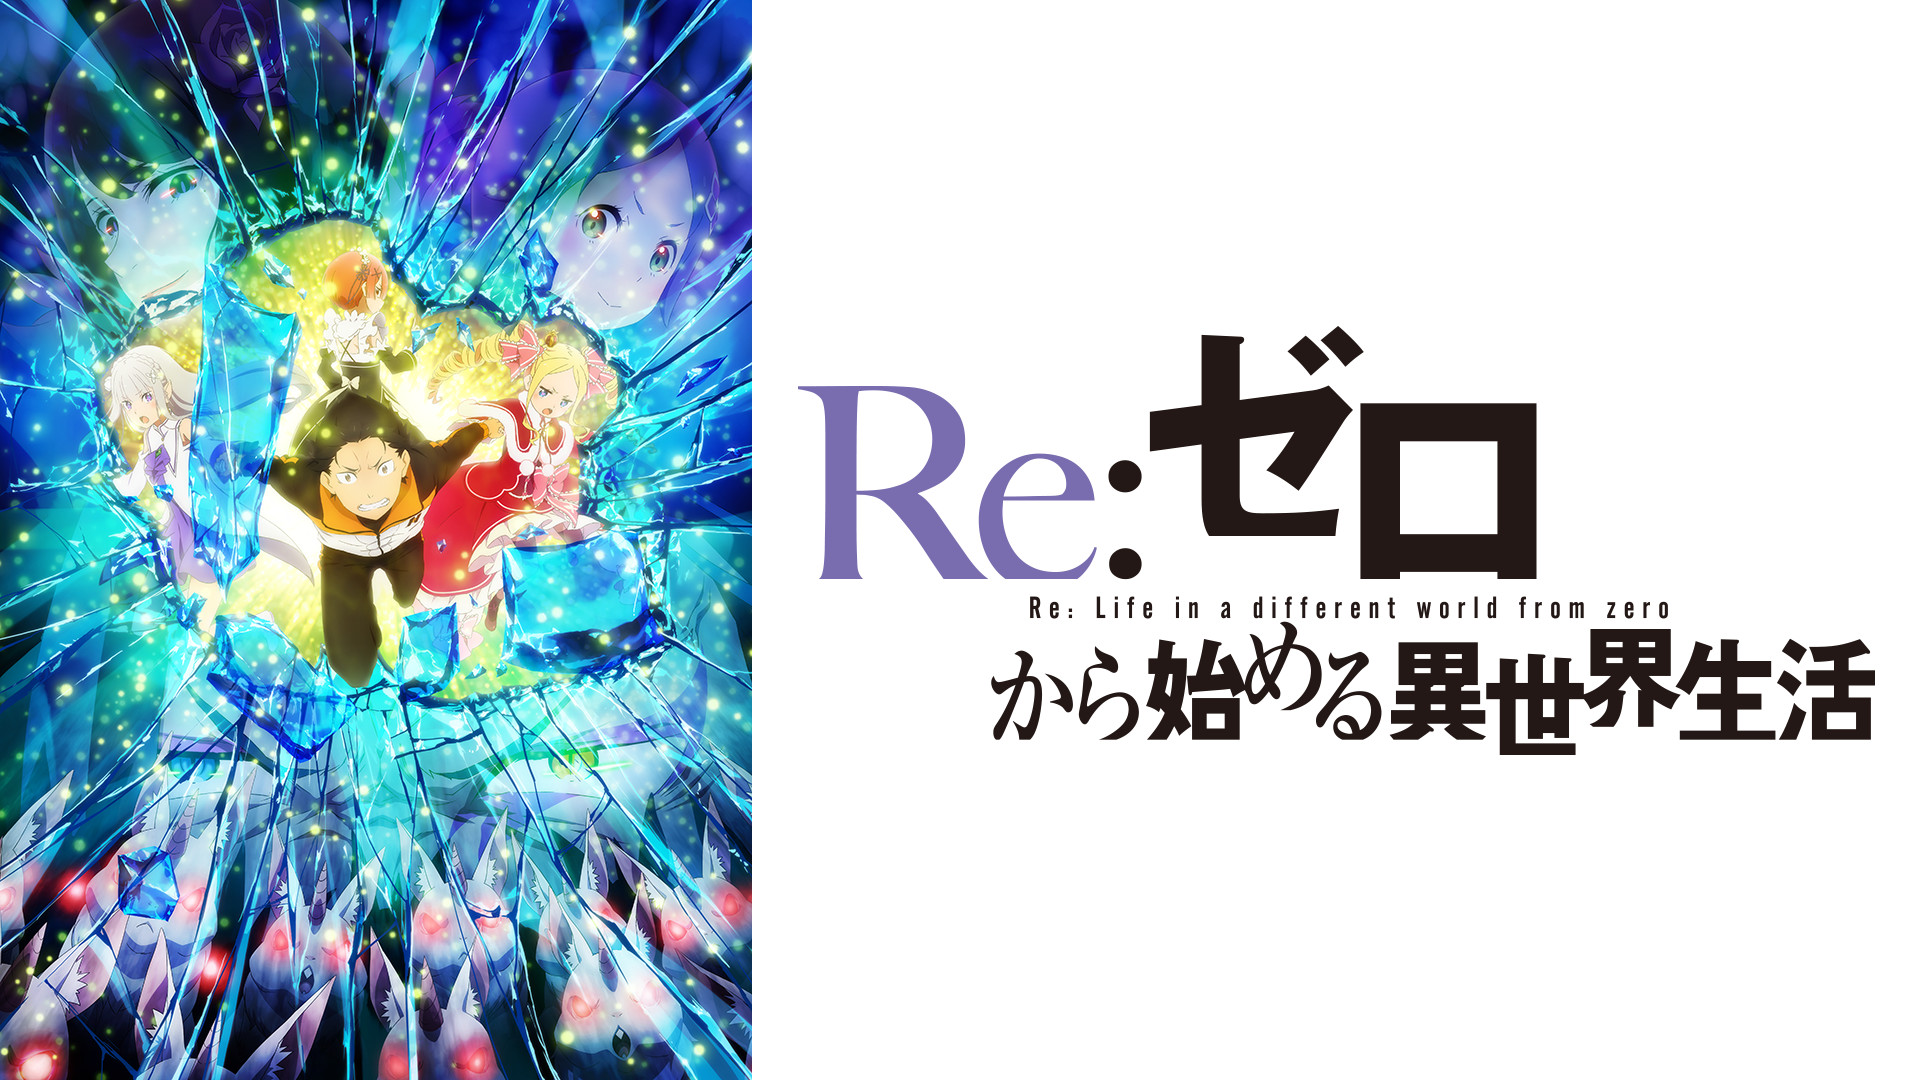 Re:ゼロから始める異世界生活 2nd season | アニメ動画見放題 | d